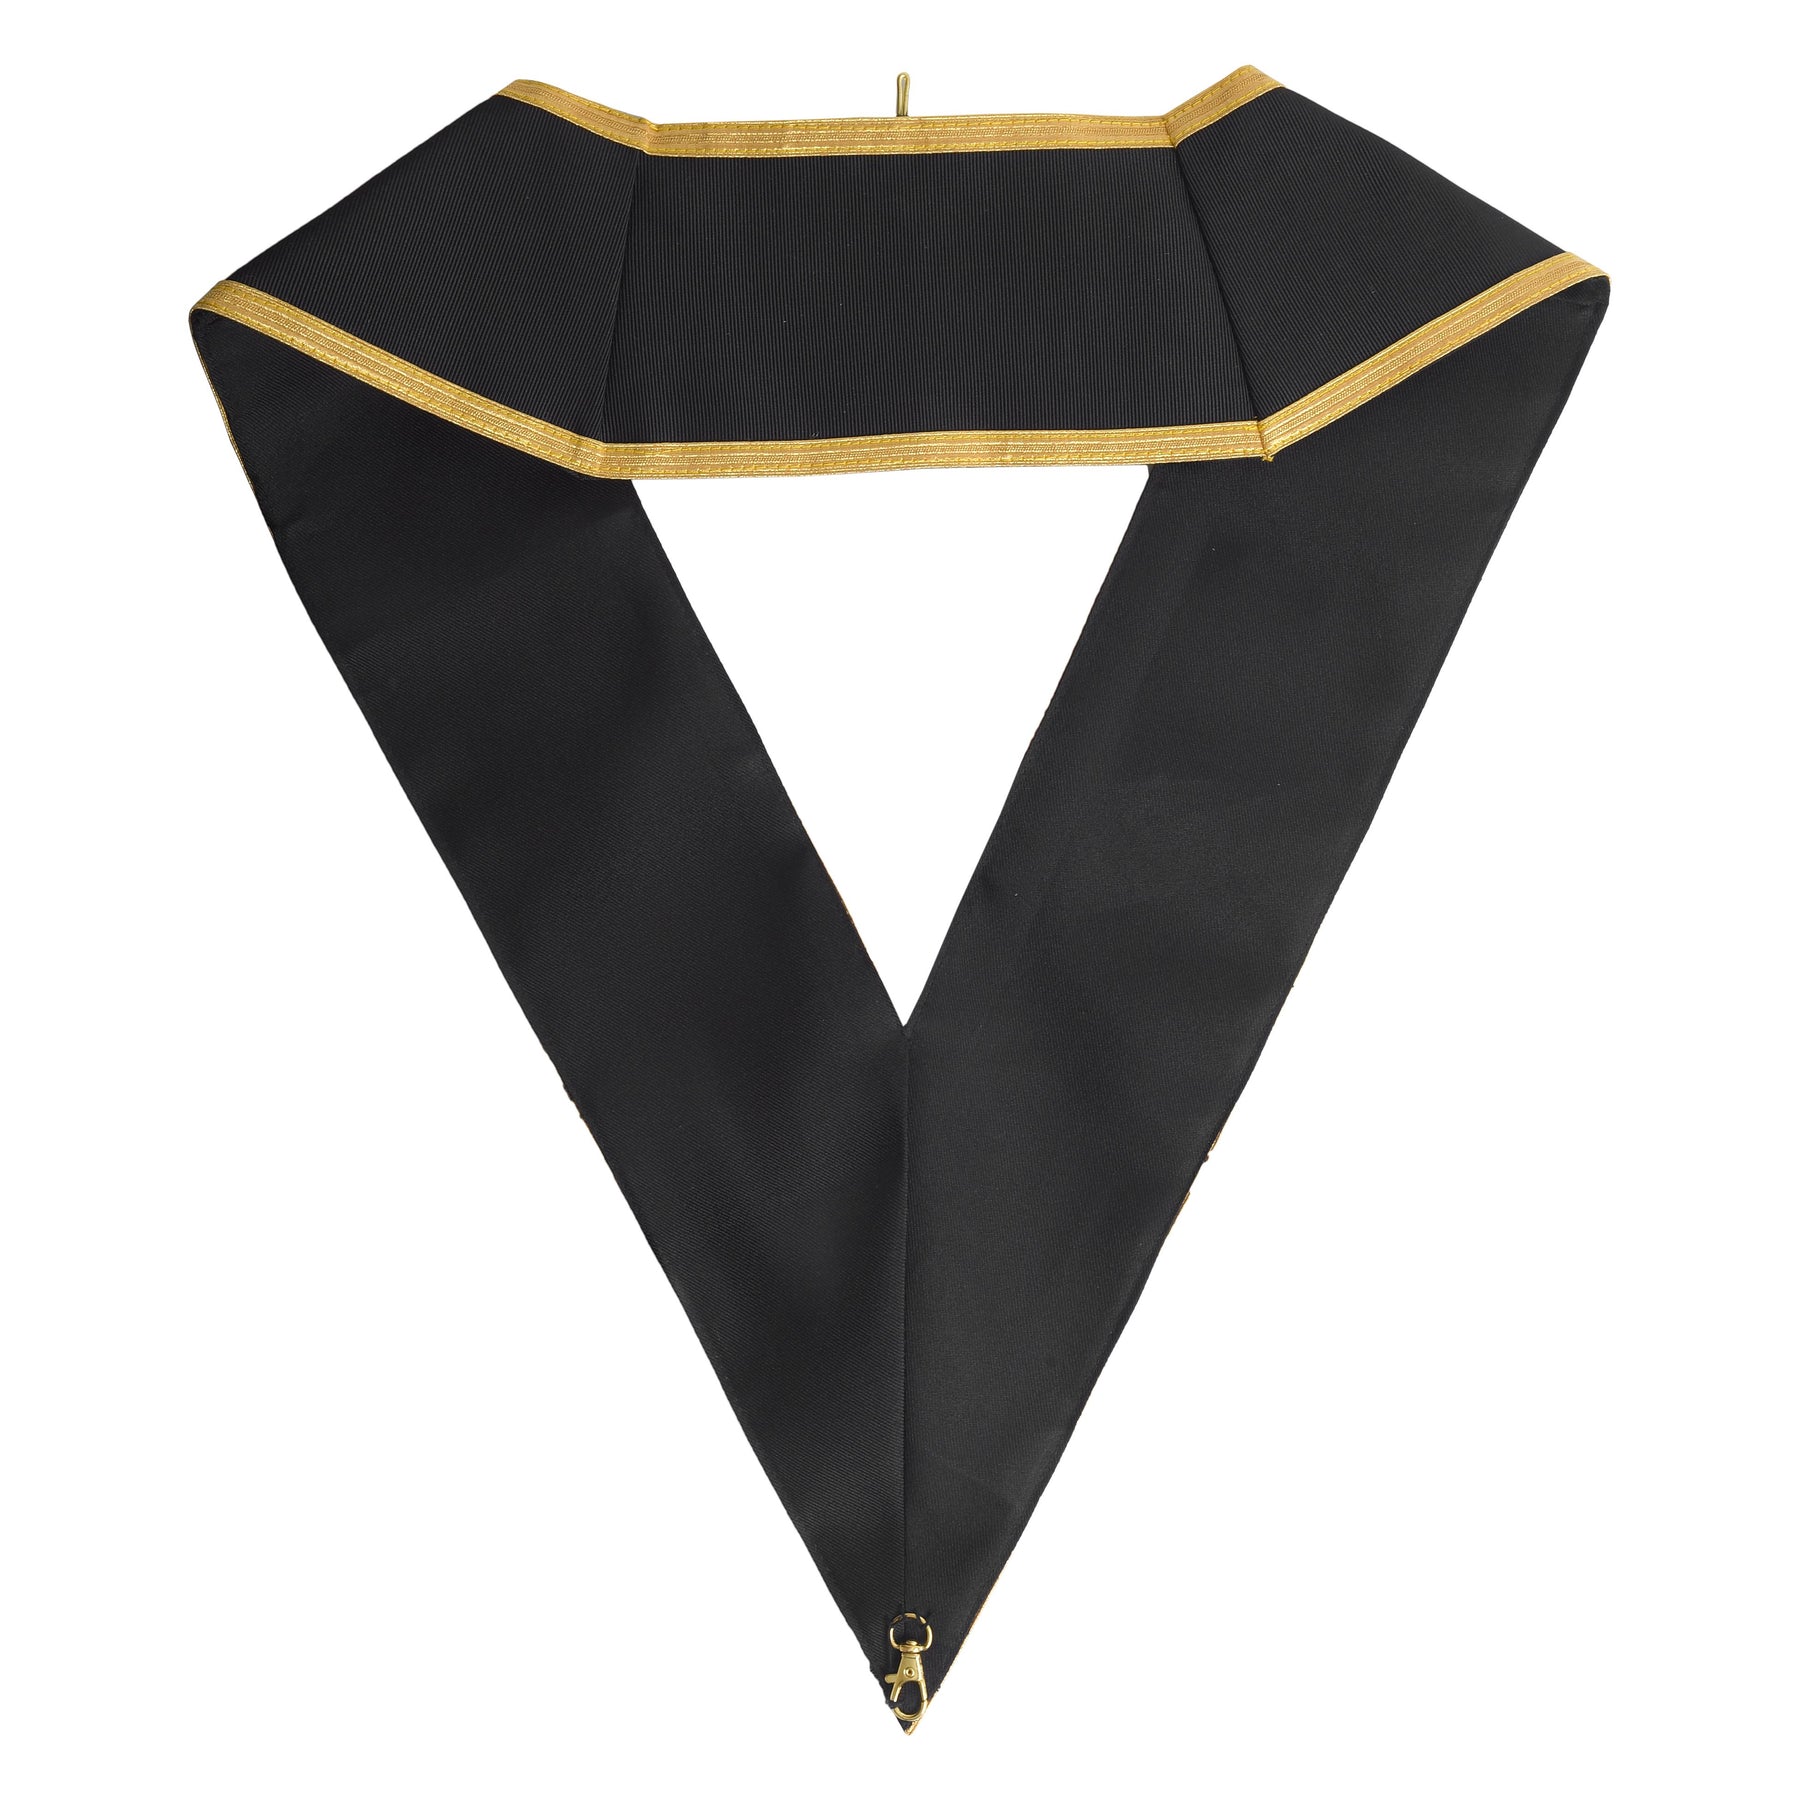 32nd Degree Scottish Rite Collar - Gold Braid With Black Backing - Bricks Masons